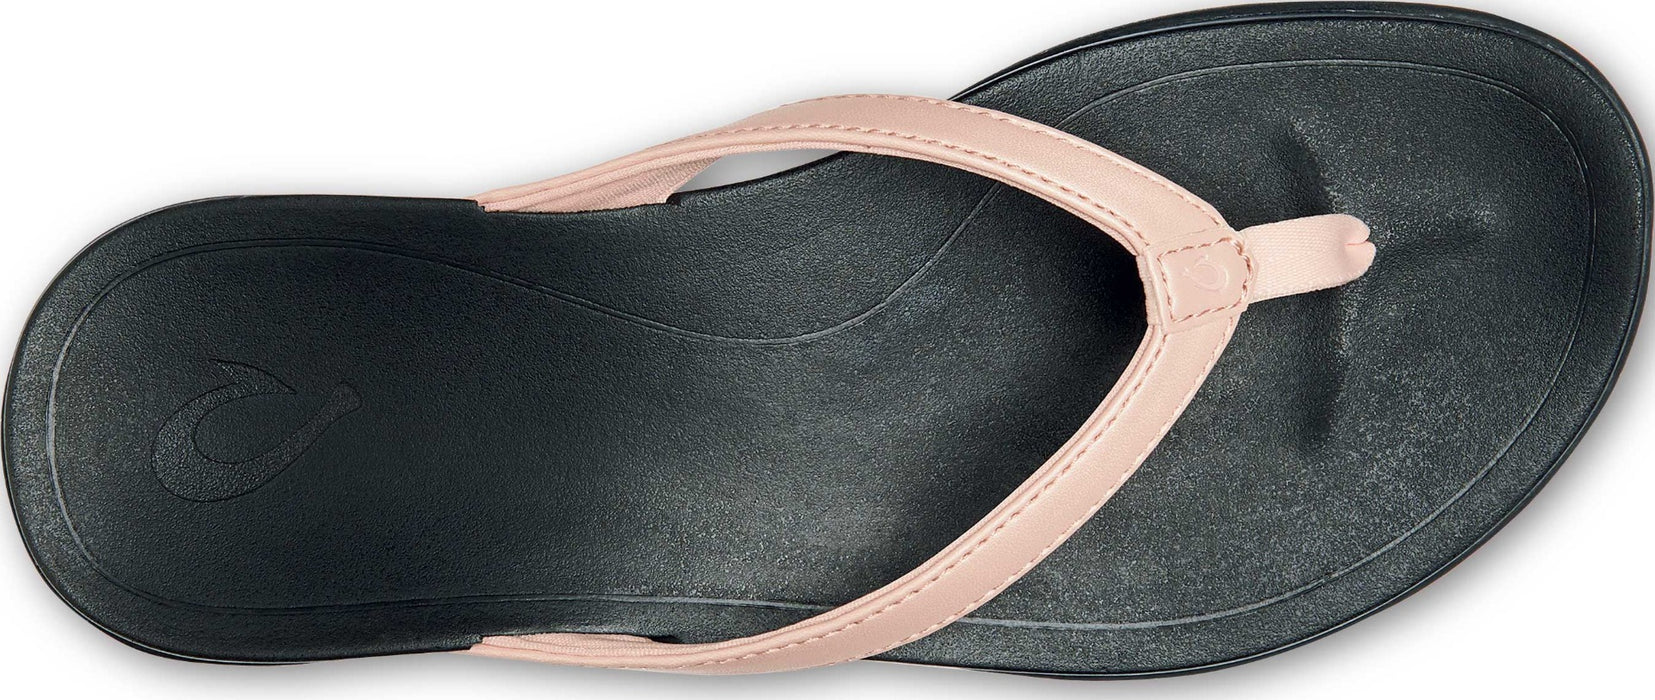 OluKai Ladies' Ho'opio Beach Sandals 2021